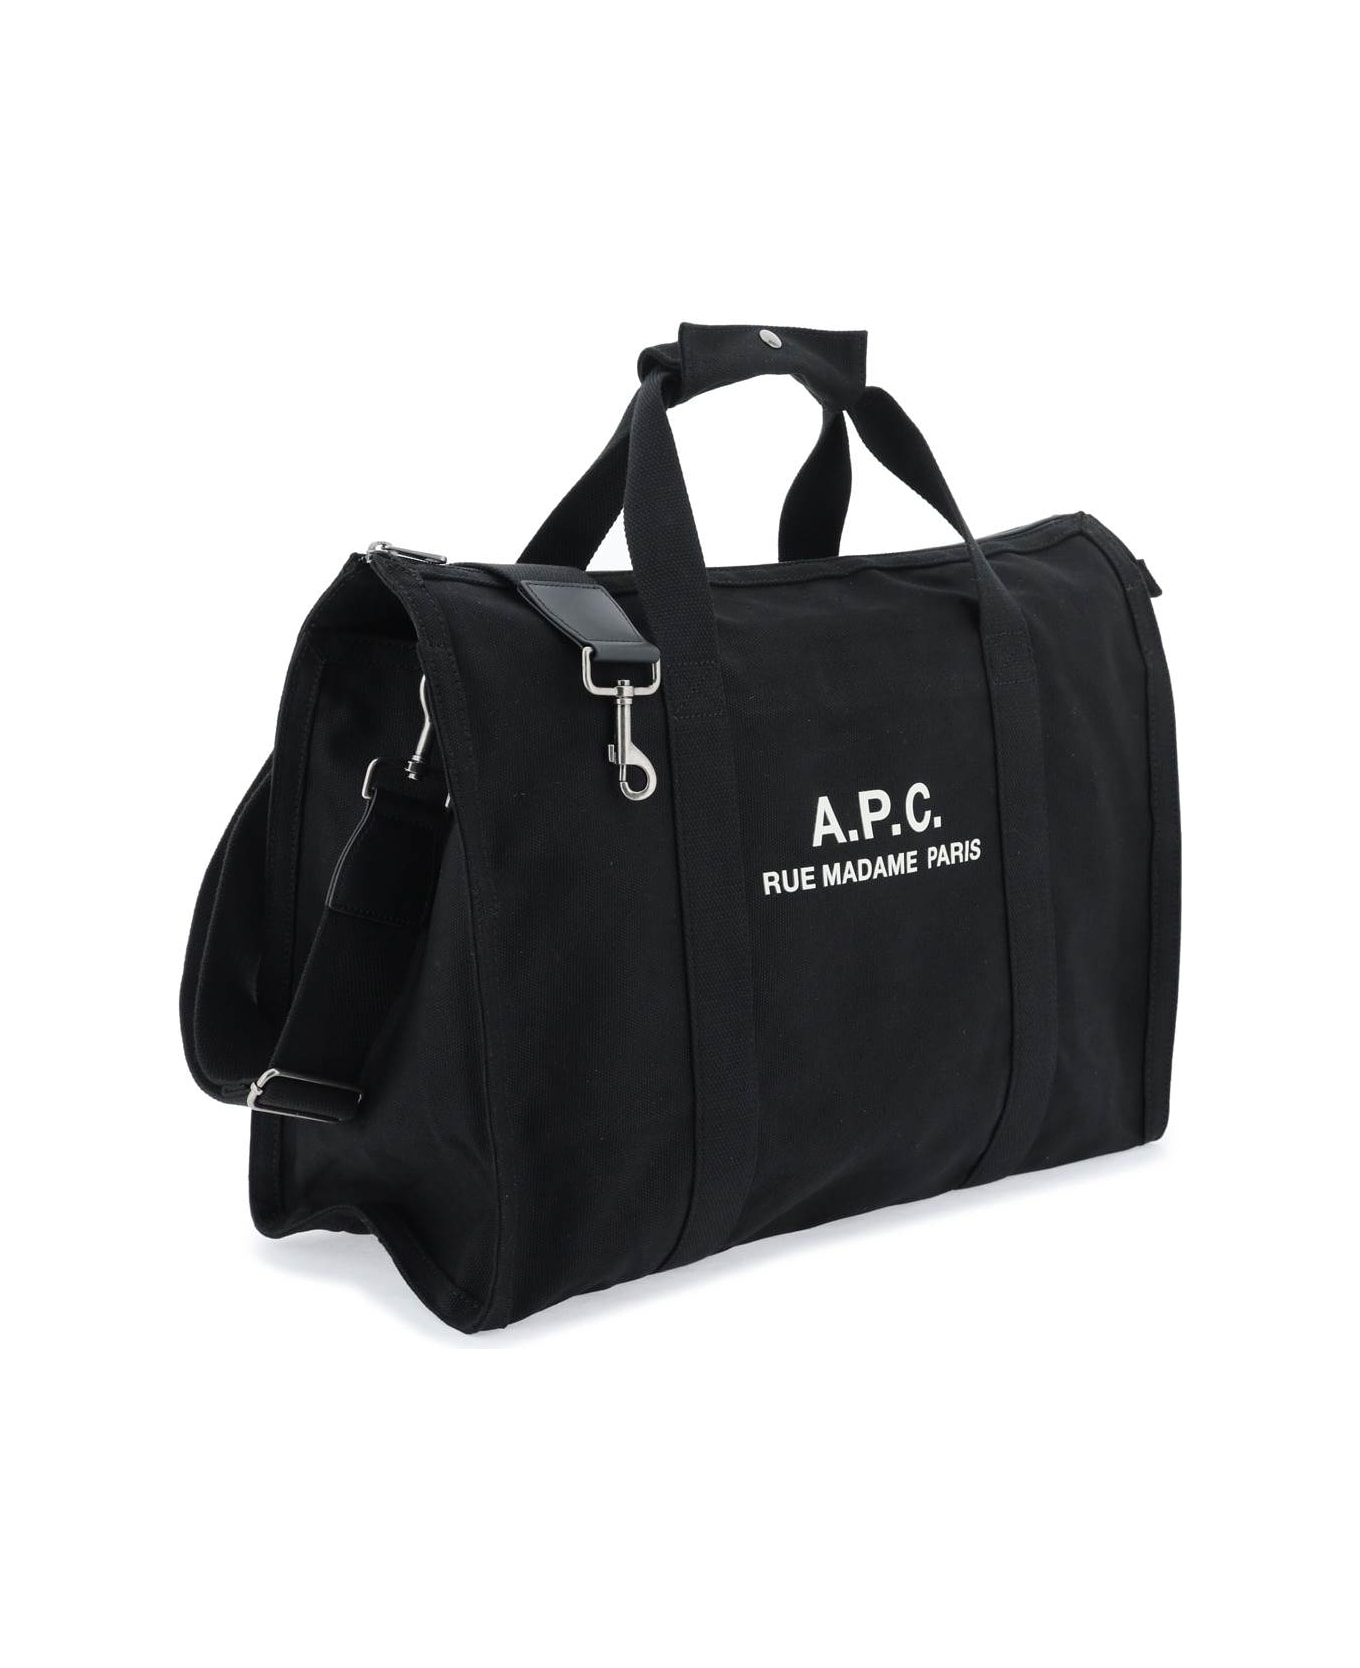 A.P.C. Gym Bag Recuperation - NOIR (Black)